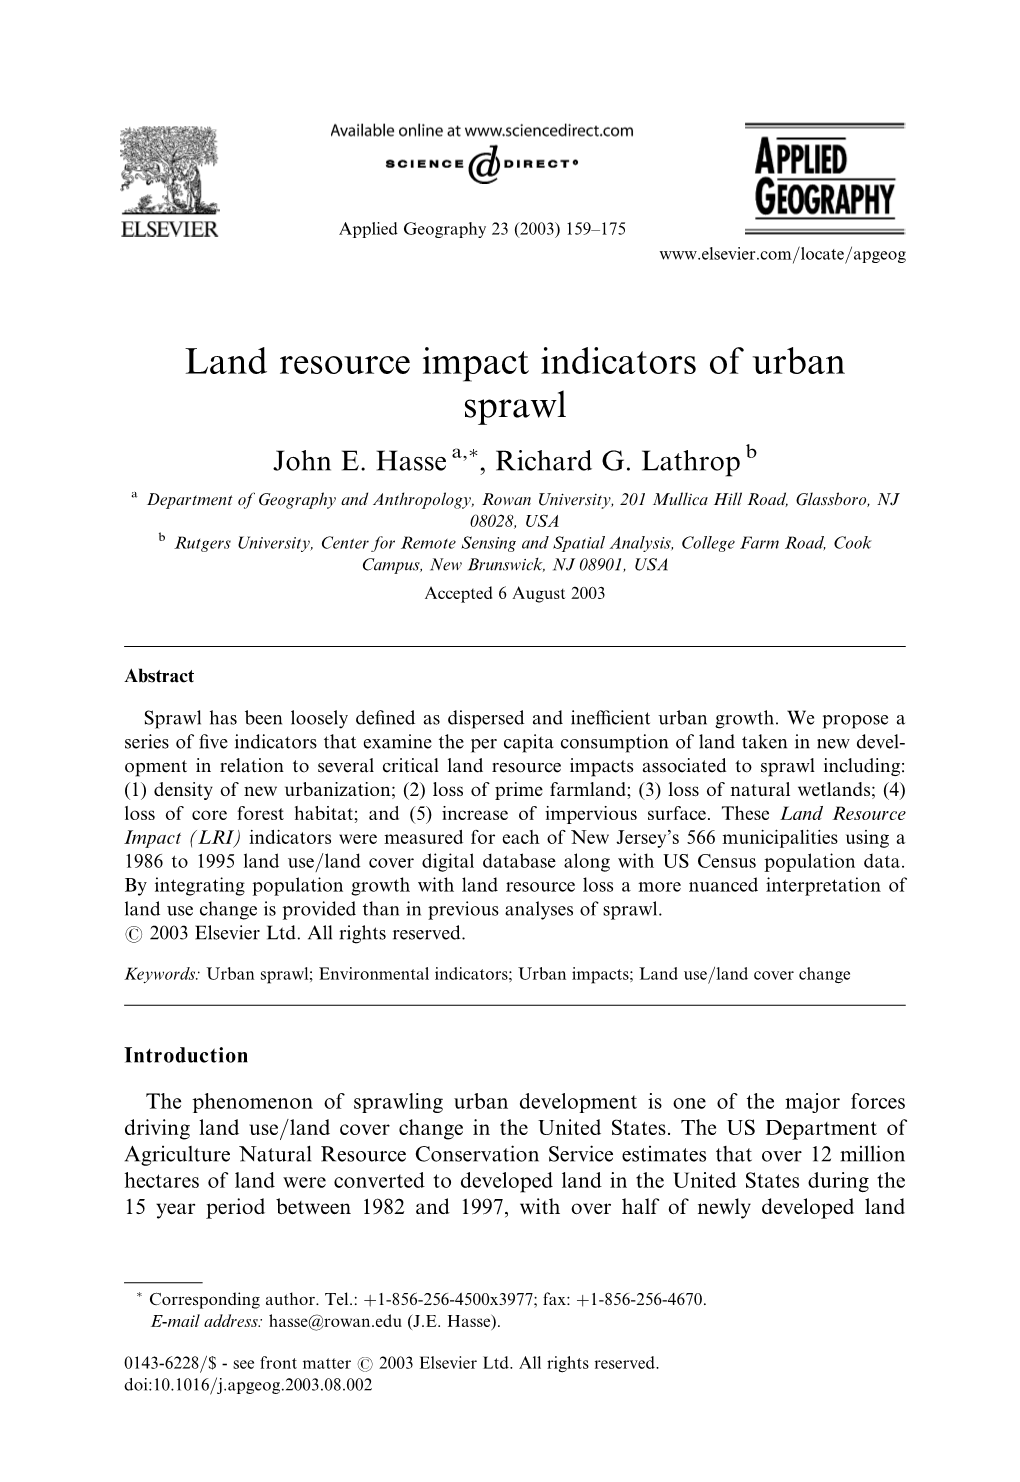 Land Resource Impact Indicators of Urban Sprawl John E